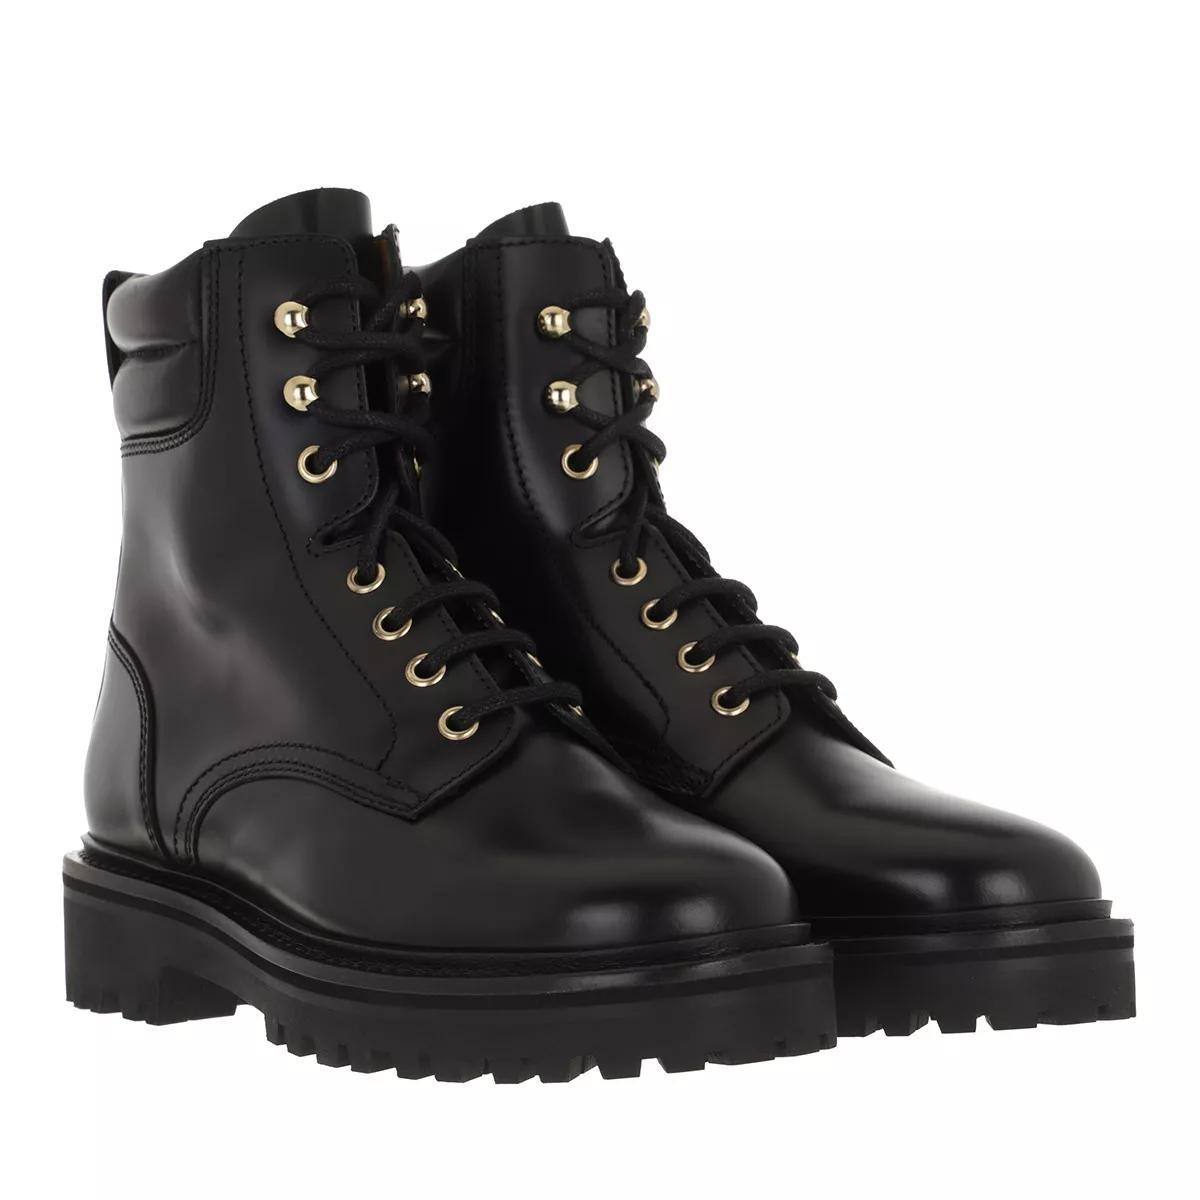 Isabel Marant Chunky Boots Black | Stivali allacciati | fashionette